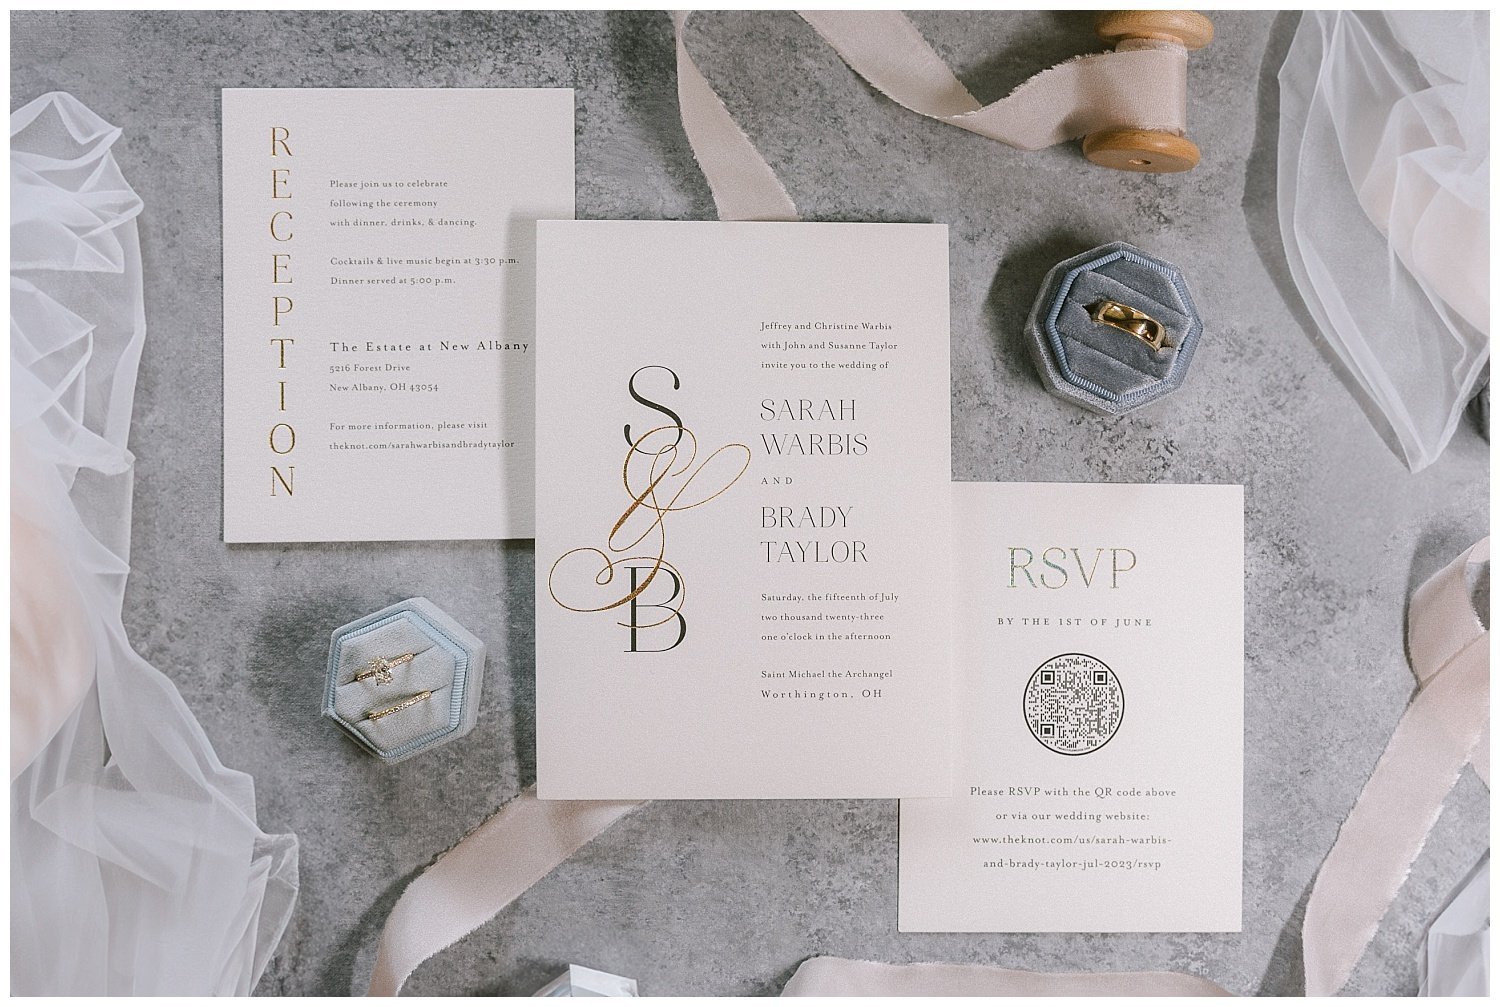 A beautiful photo of Wedding invitations 